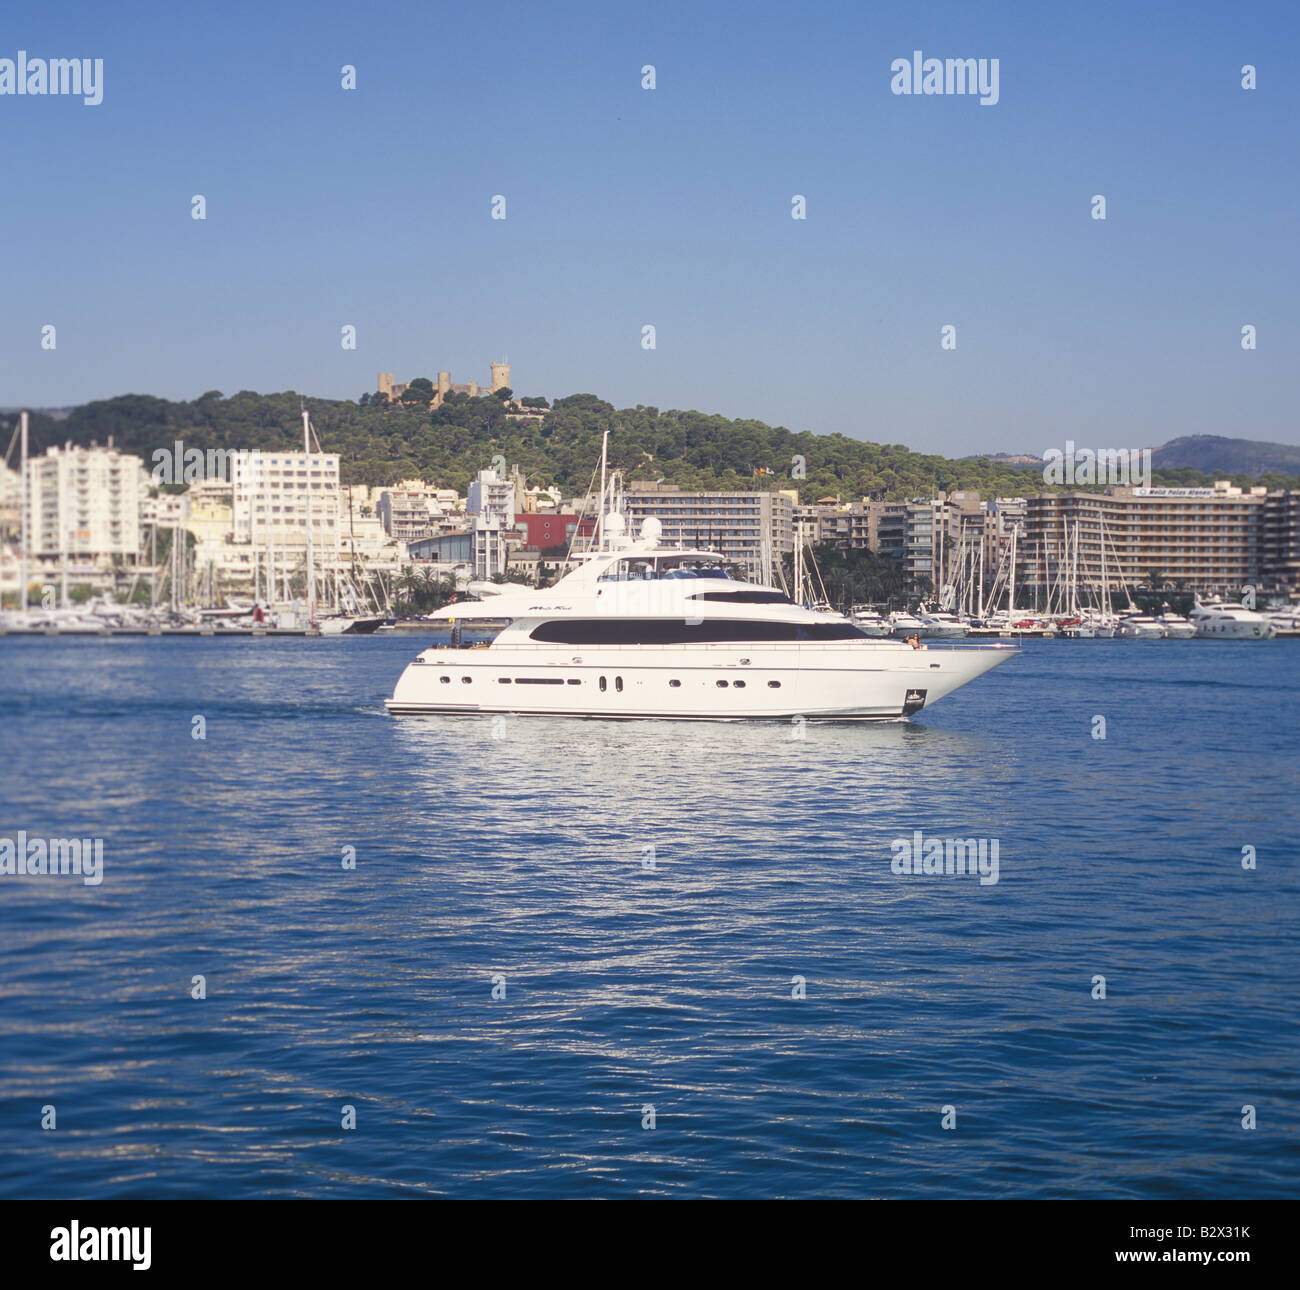 Luxury superyacht The Monte Fino 92 